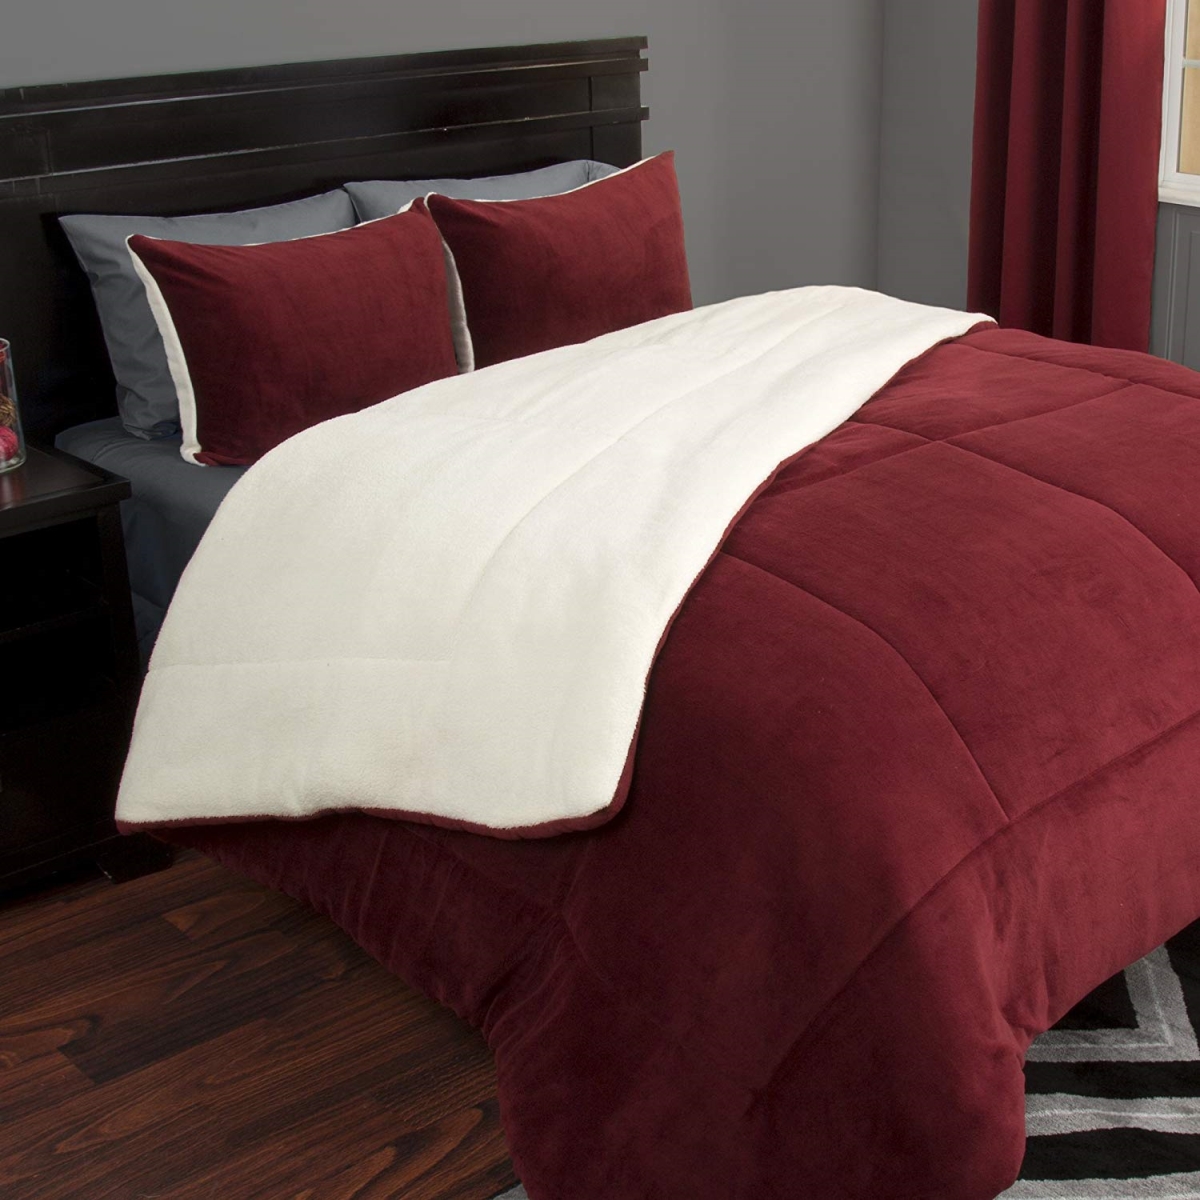 66a-27452 2 Piece Sherpa & Fleece Comforter Set, Twin Size - Burgandy